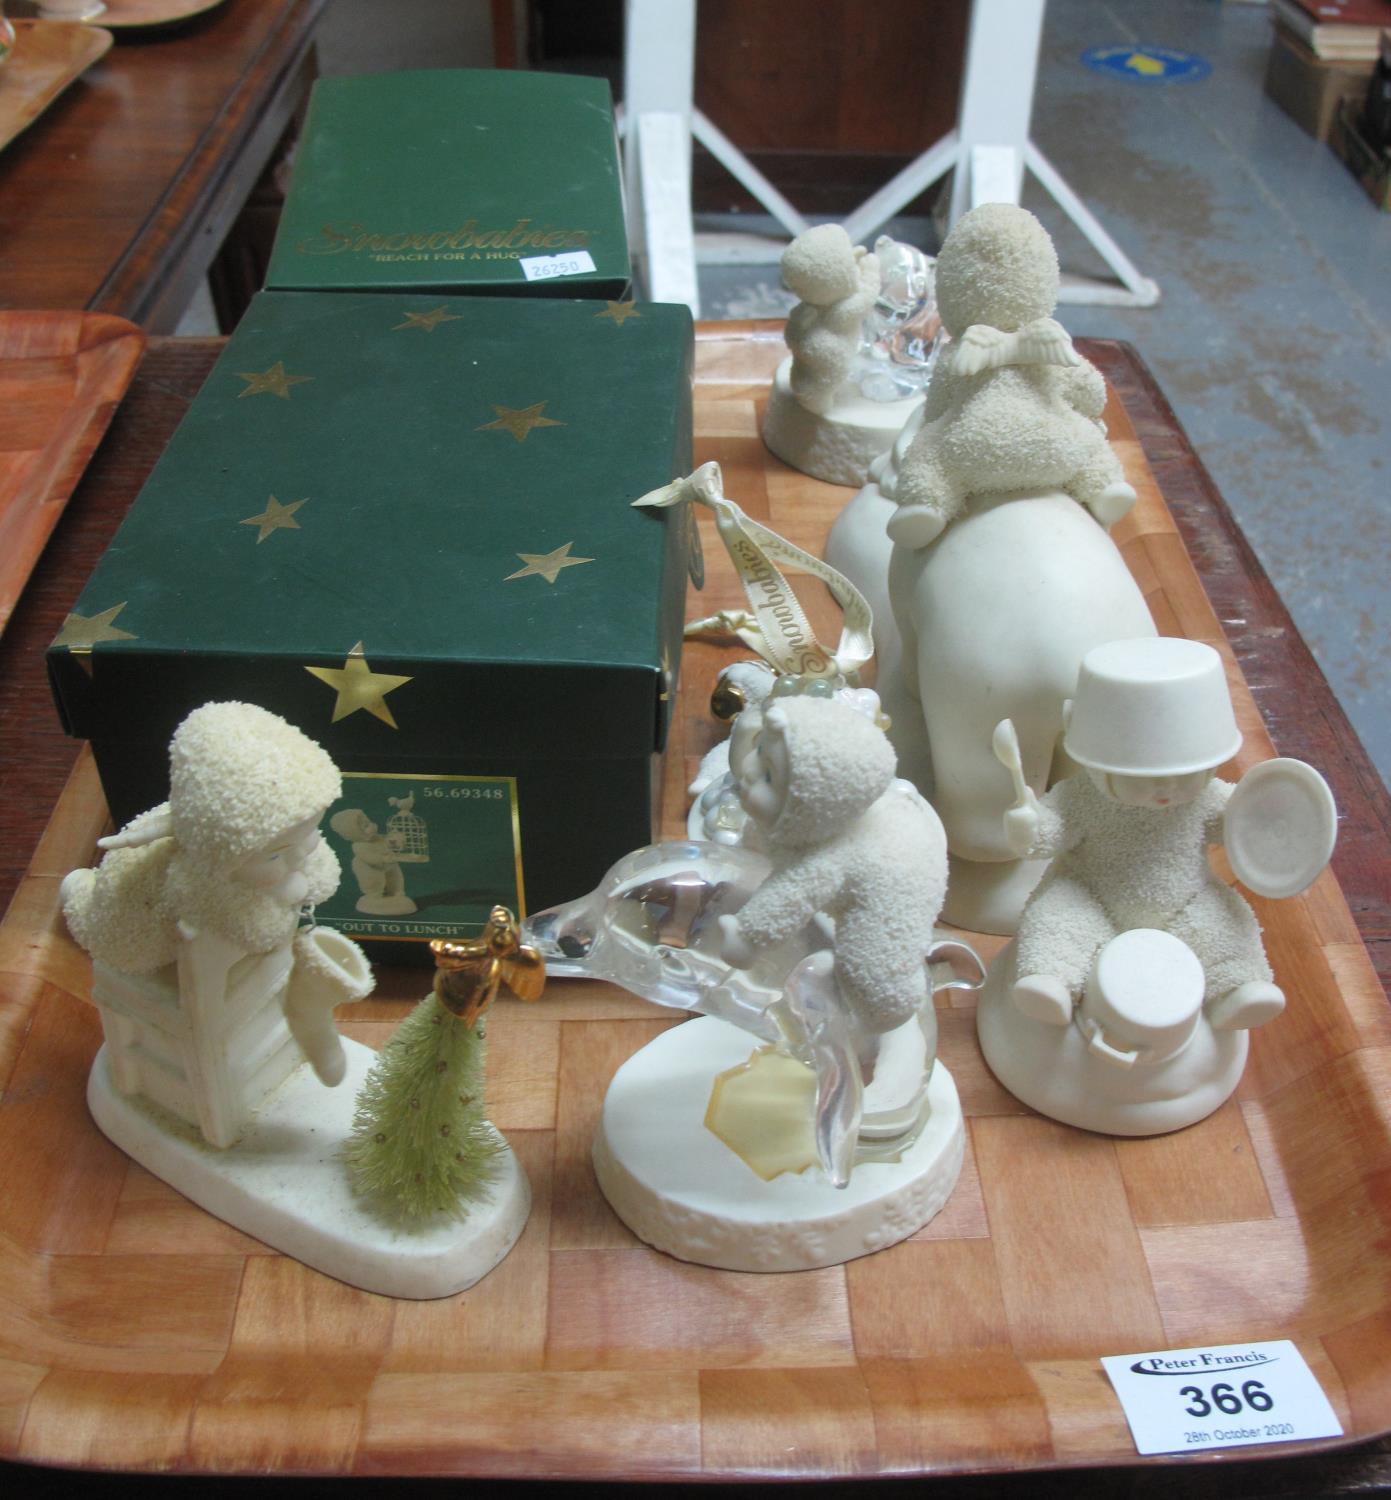 Tray of various Snow babies figurines. (B.P. 21% + VAT)